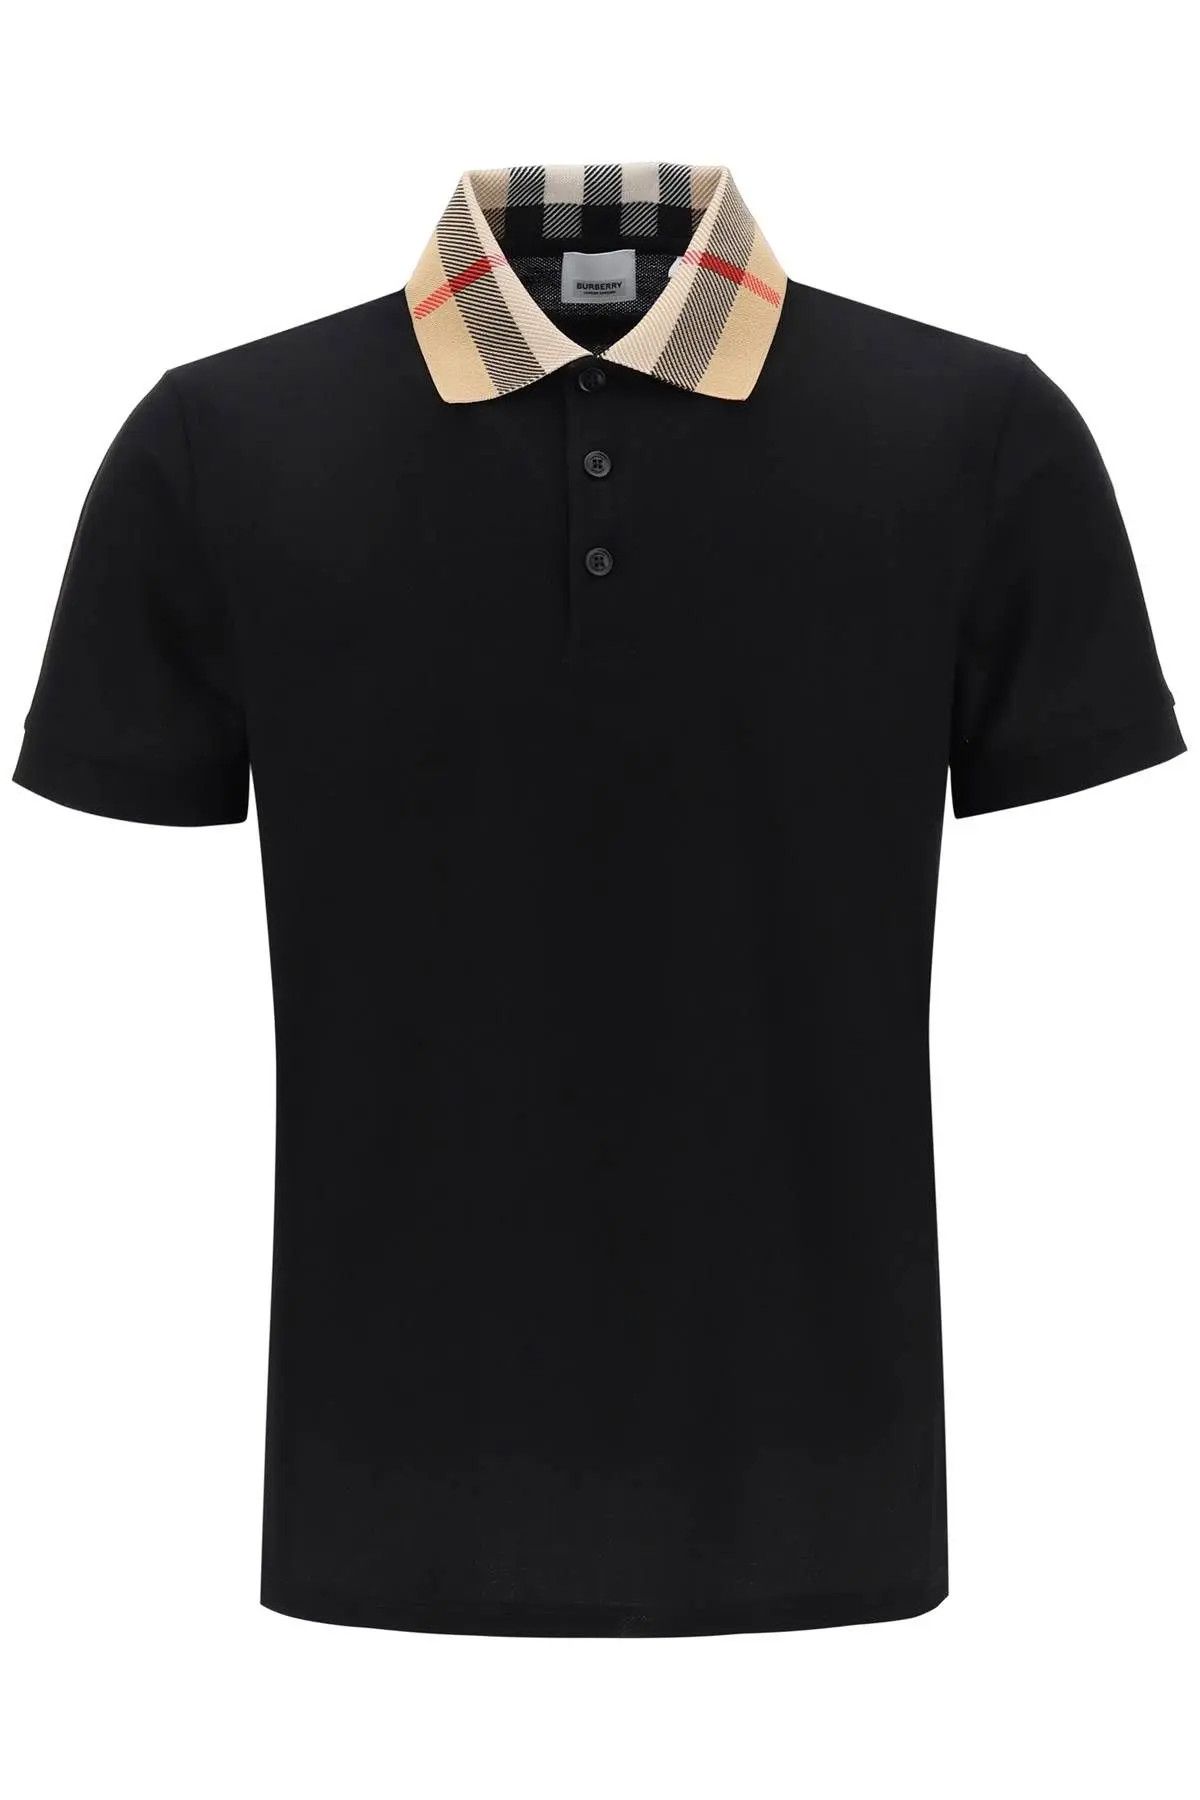 Burberry o1s22i1n0823 Polo Shirt in Black | Grailed